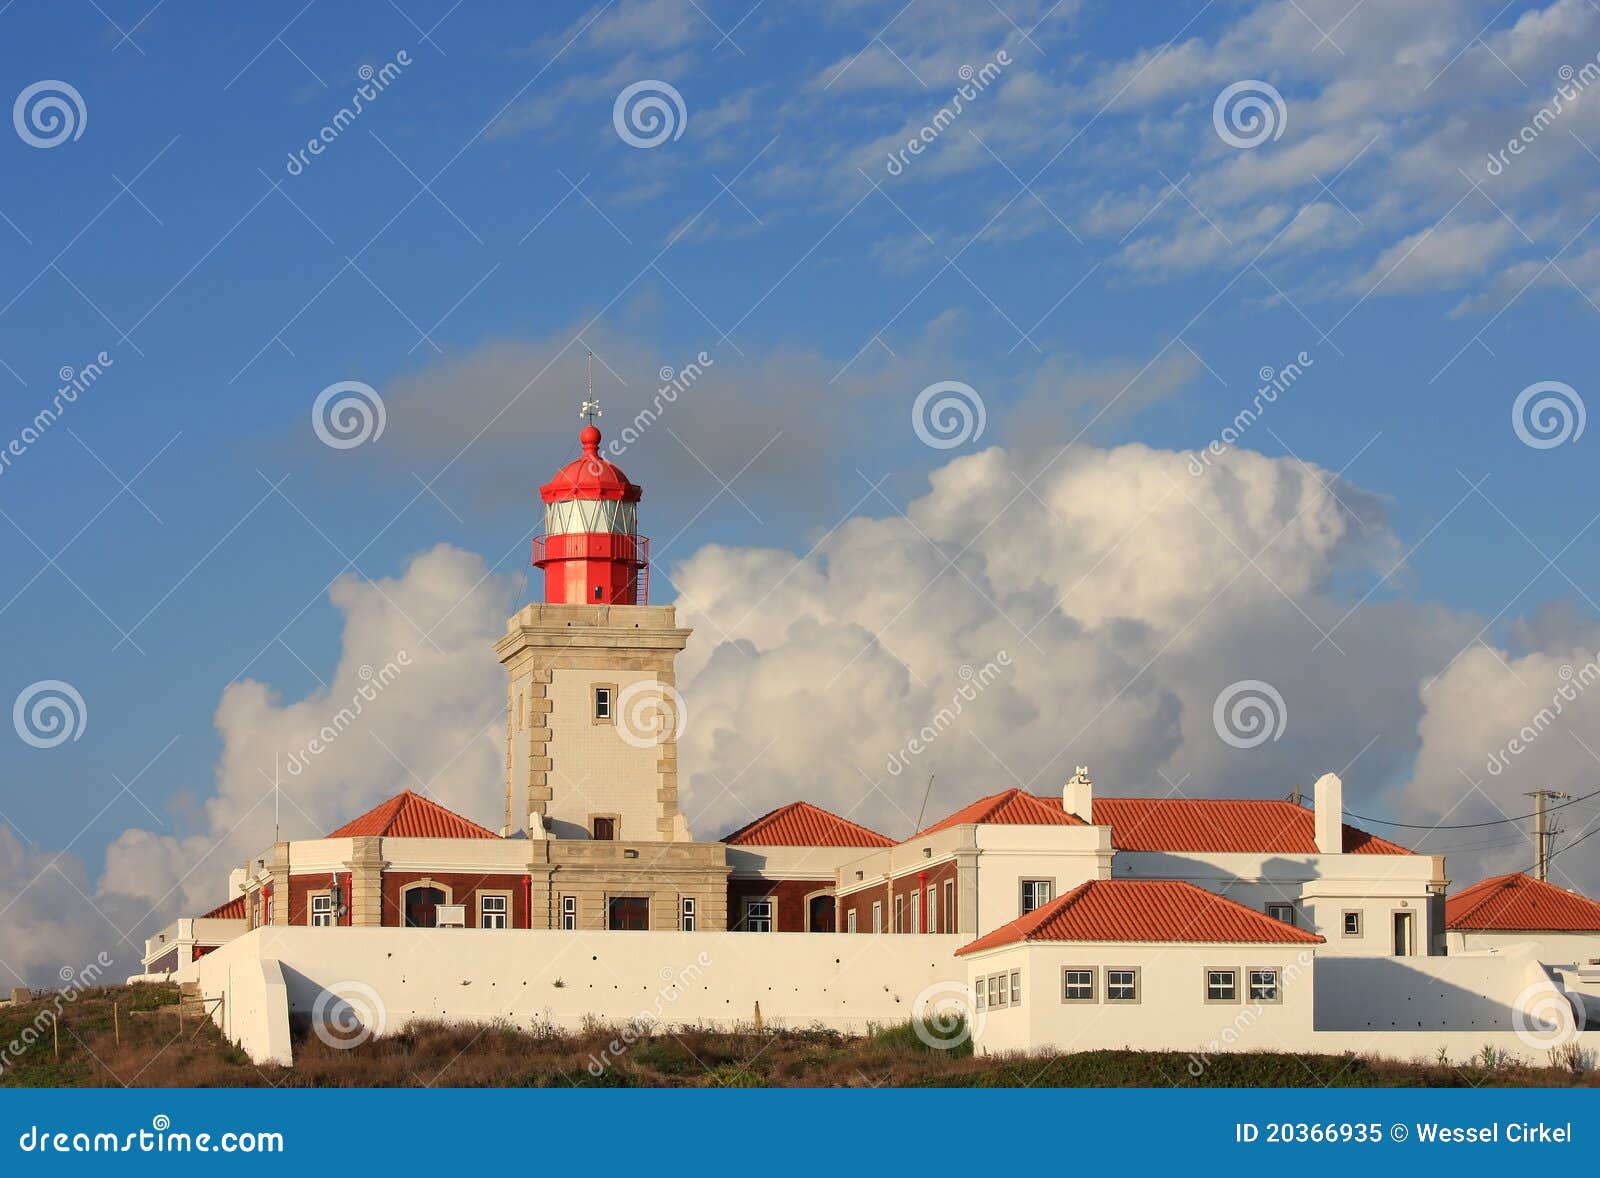 lighthouse of cabo da roca, west coast of portugal